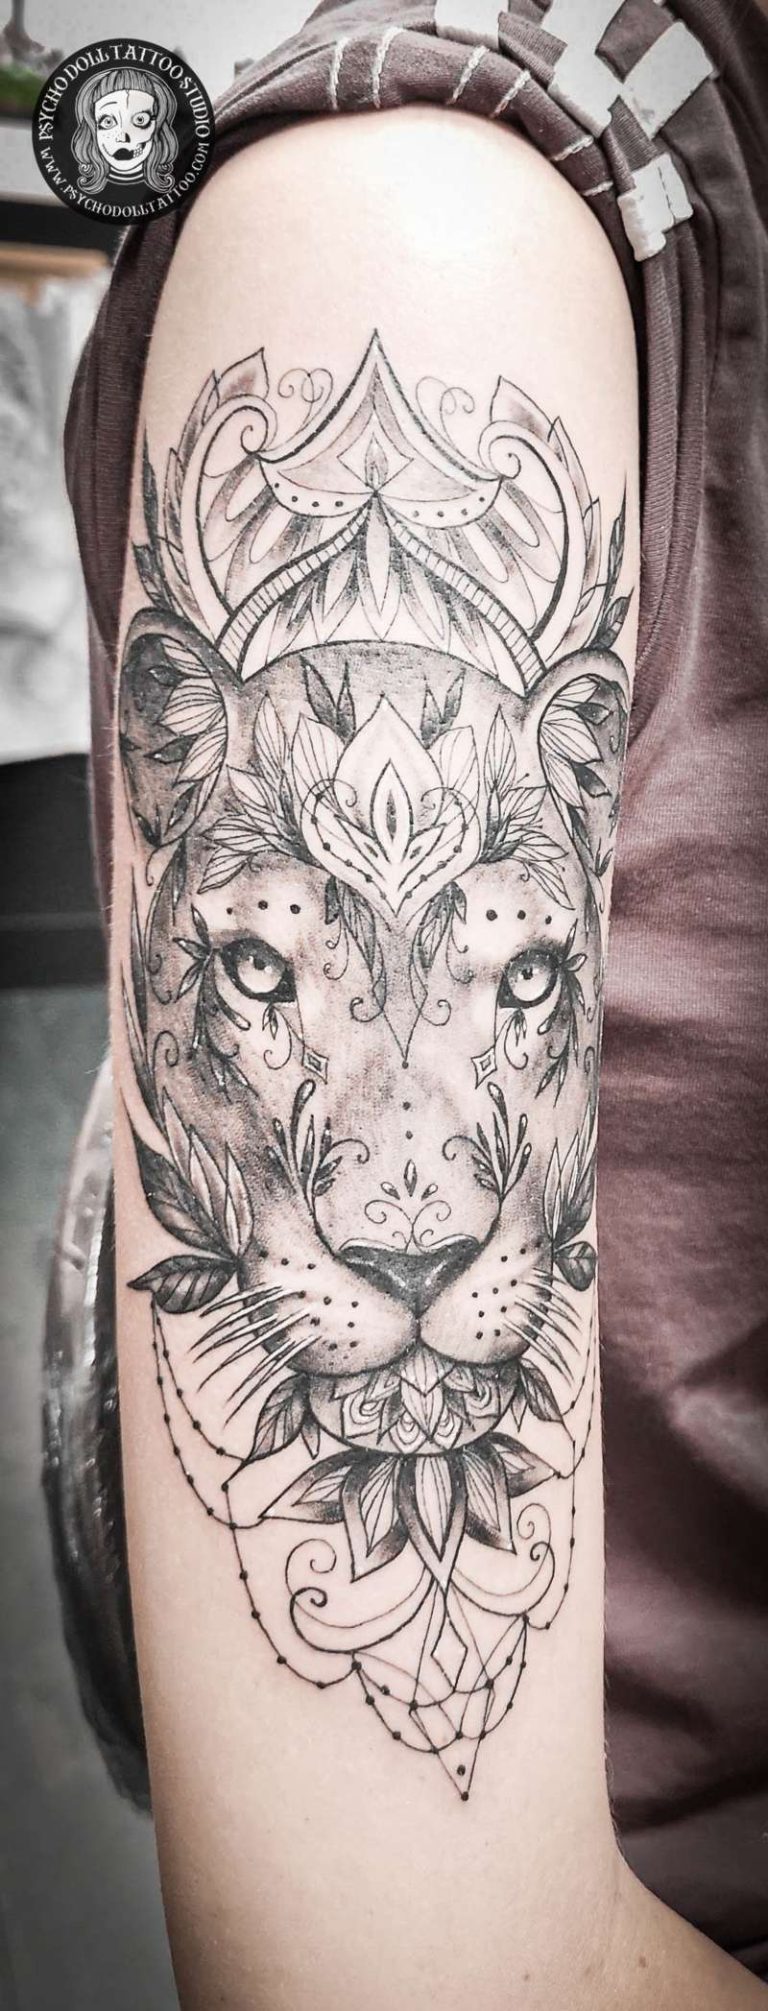 25 Awesome Geometric Animal Tattoos – Tattoo for a week